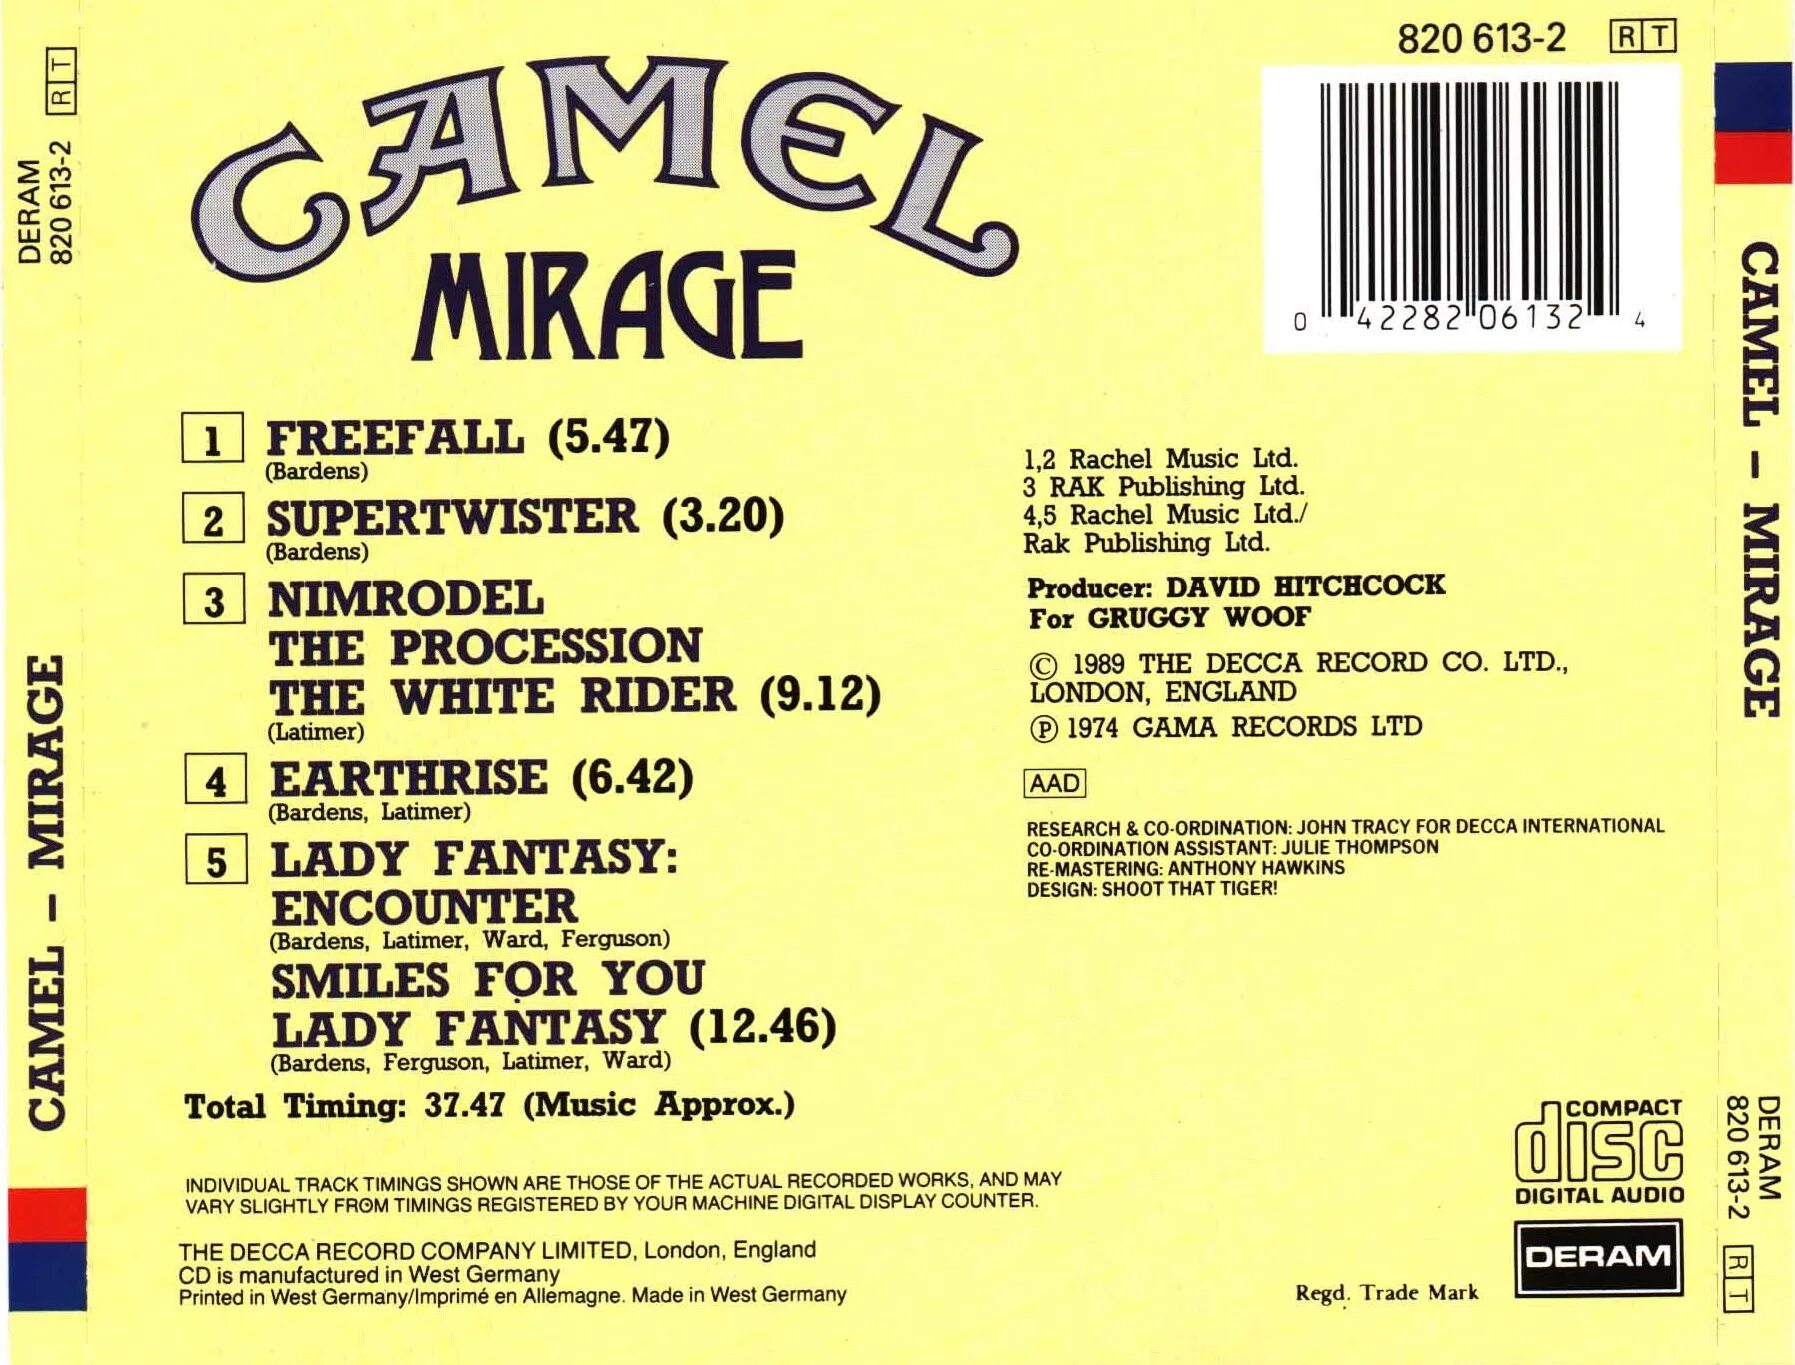 Camel Mirage 1974. Camel альбом "Mirage". Camel Mirage 1974 album Cover. Мираж Cover. Мираж слова текст